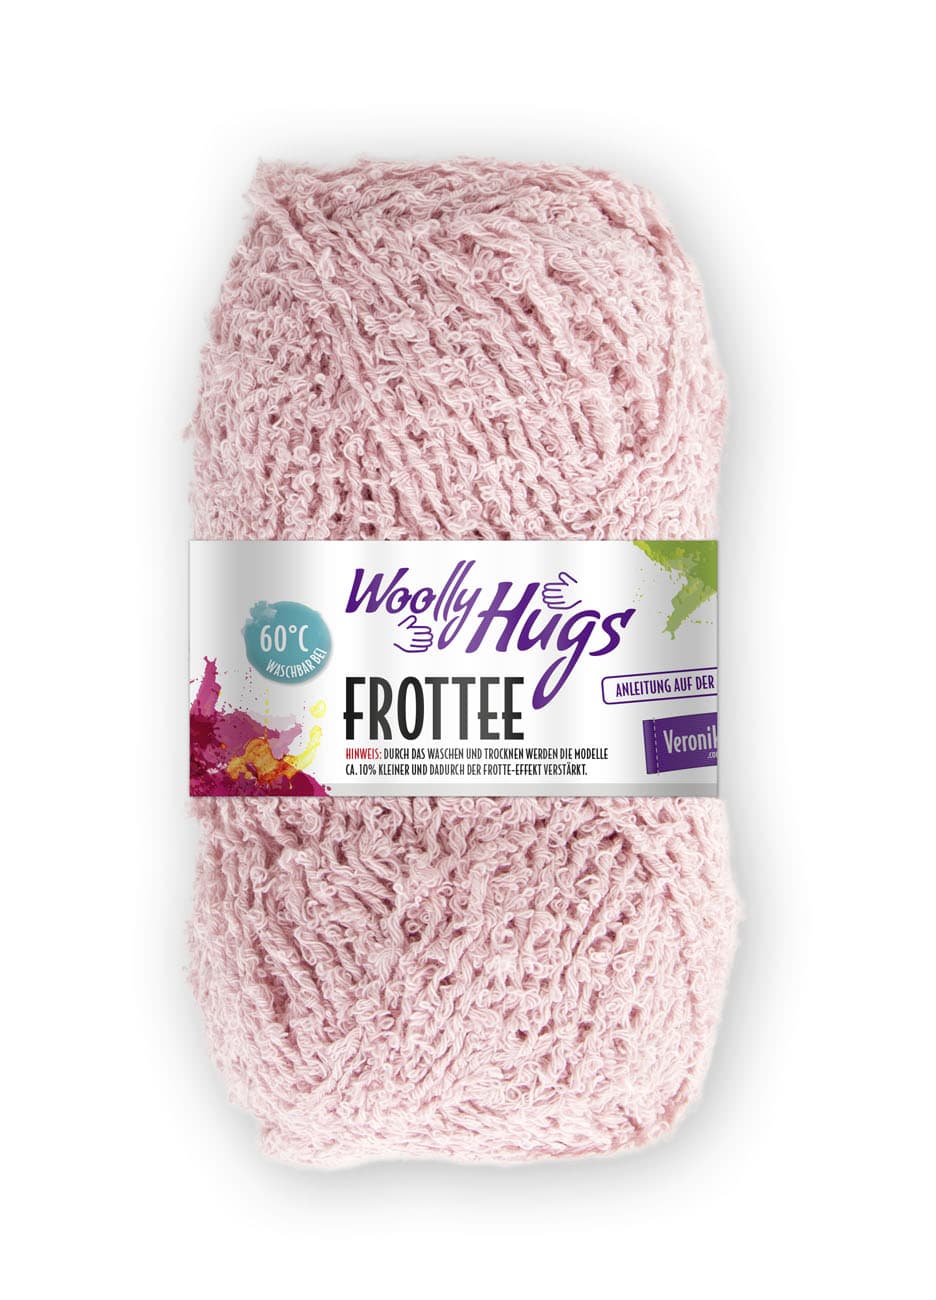 Woolly Hugs Frottee 33